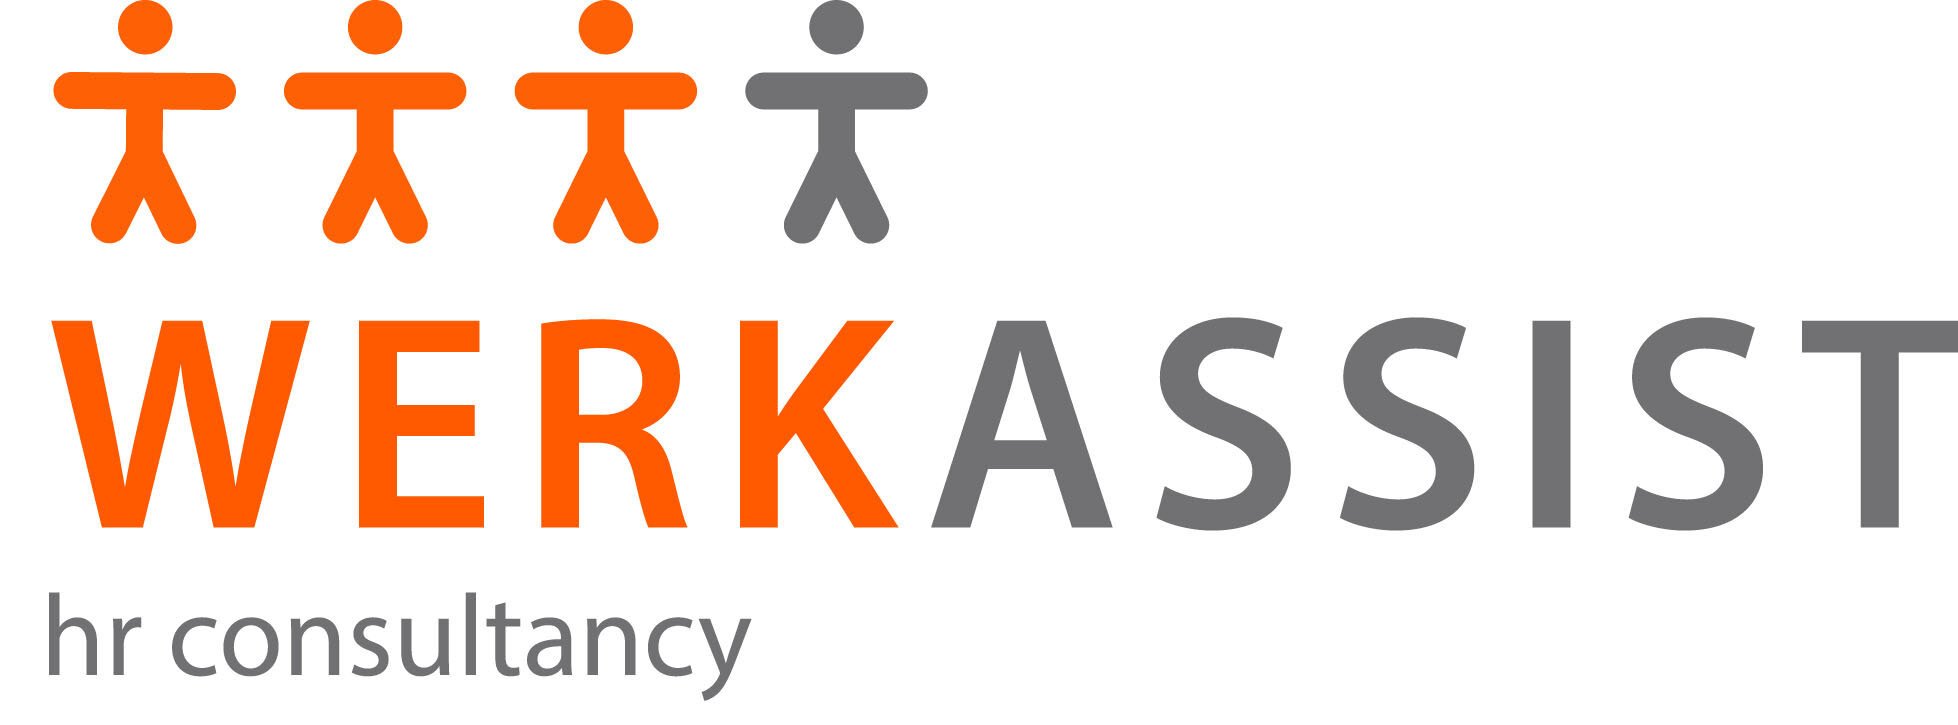 werkassist-logo-jobfish.jpeg